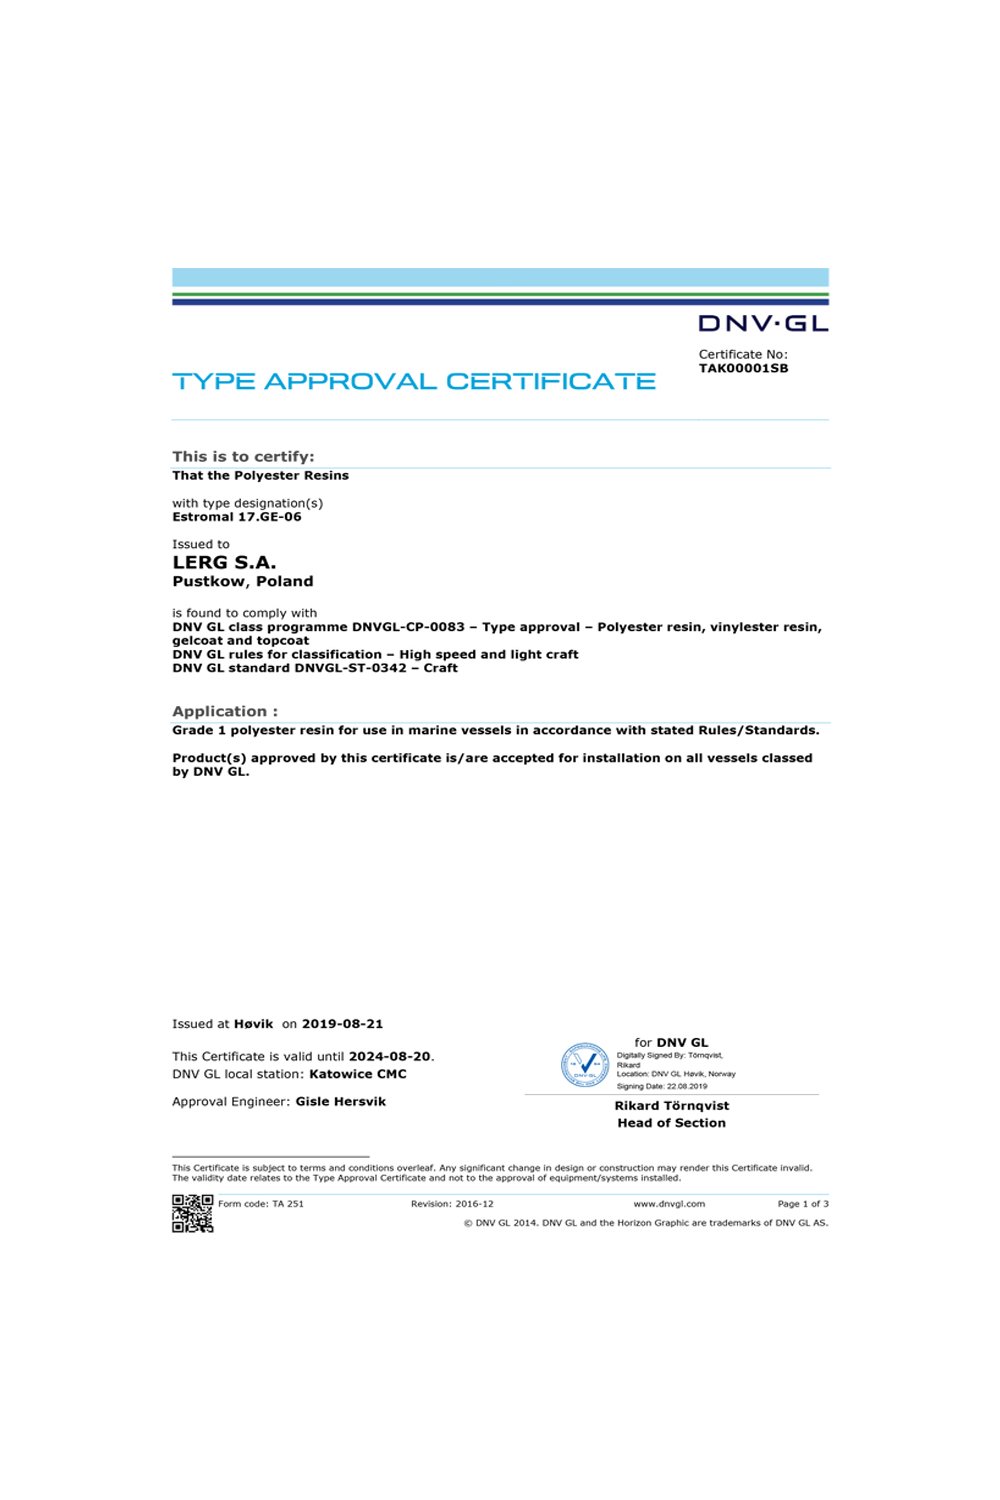 Certyfikat DNV-GL  Estromal 17.GE-06 - zdjęcie